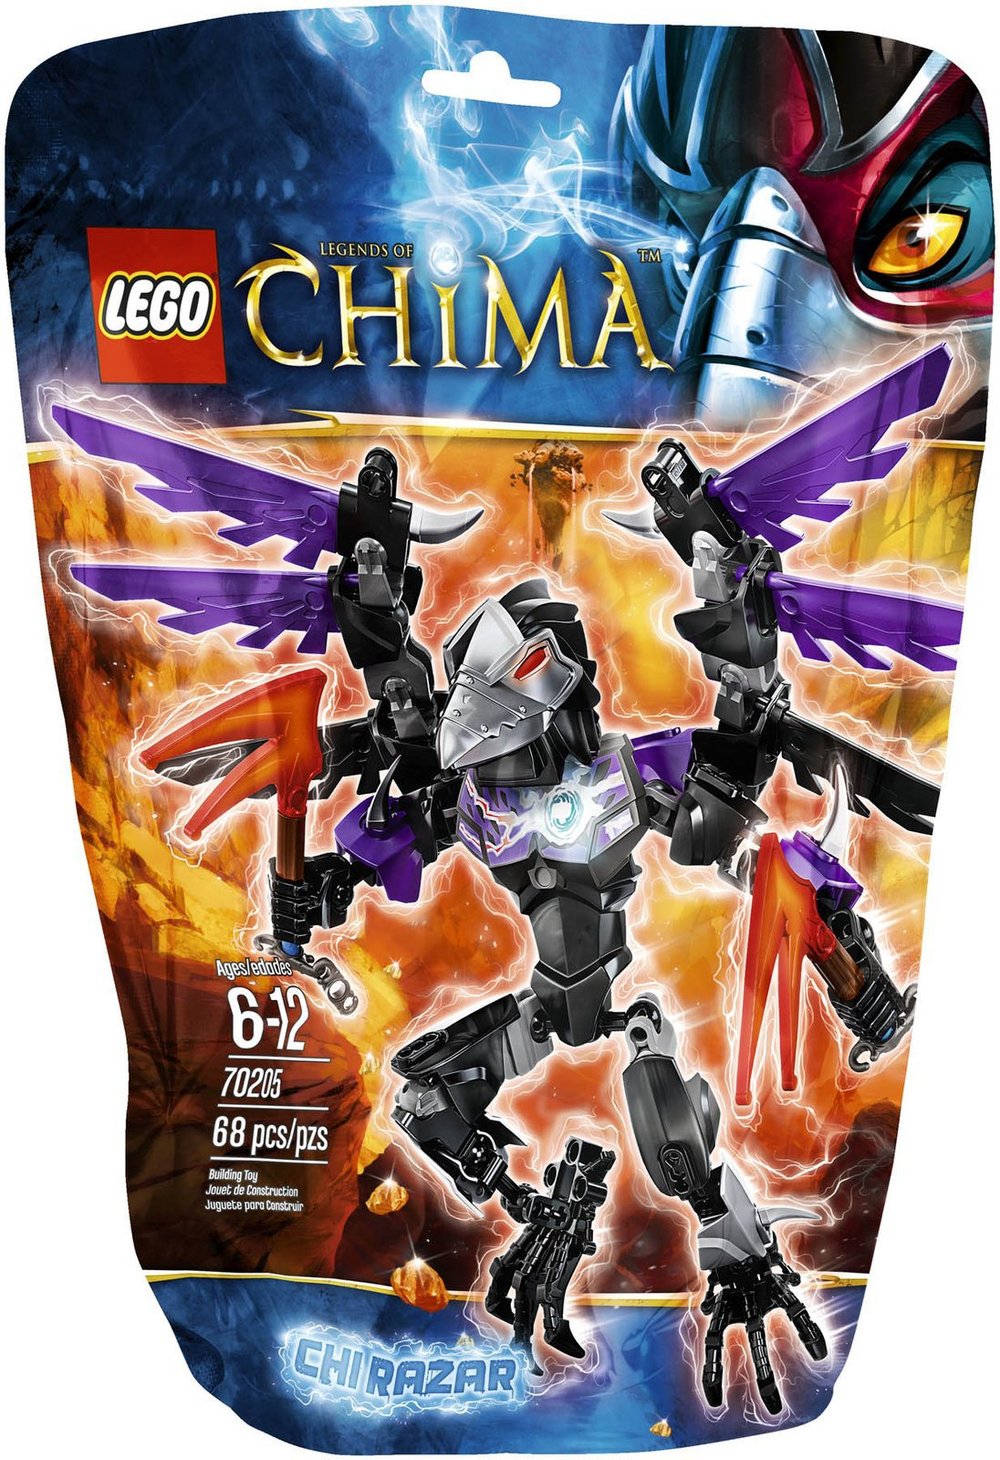 LEGO Chima: ЧИ Разар 70205 — CHI Razar — Лего Чима